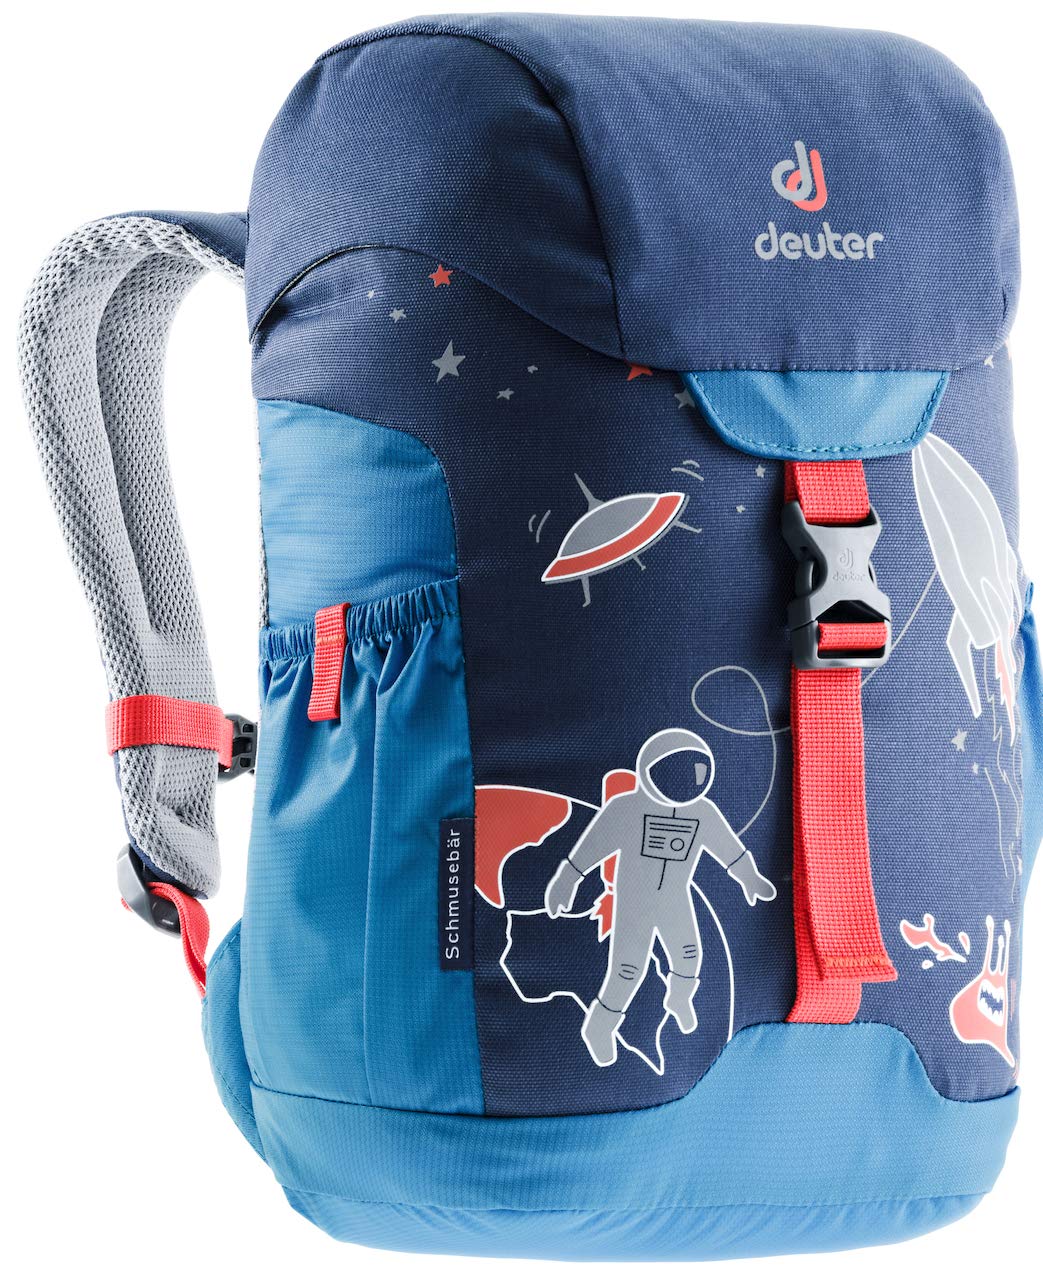 Deuter Schmusebar Backpack - Kid's - Shoplifestyle